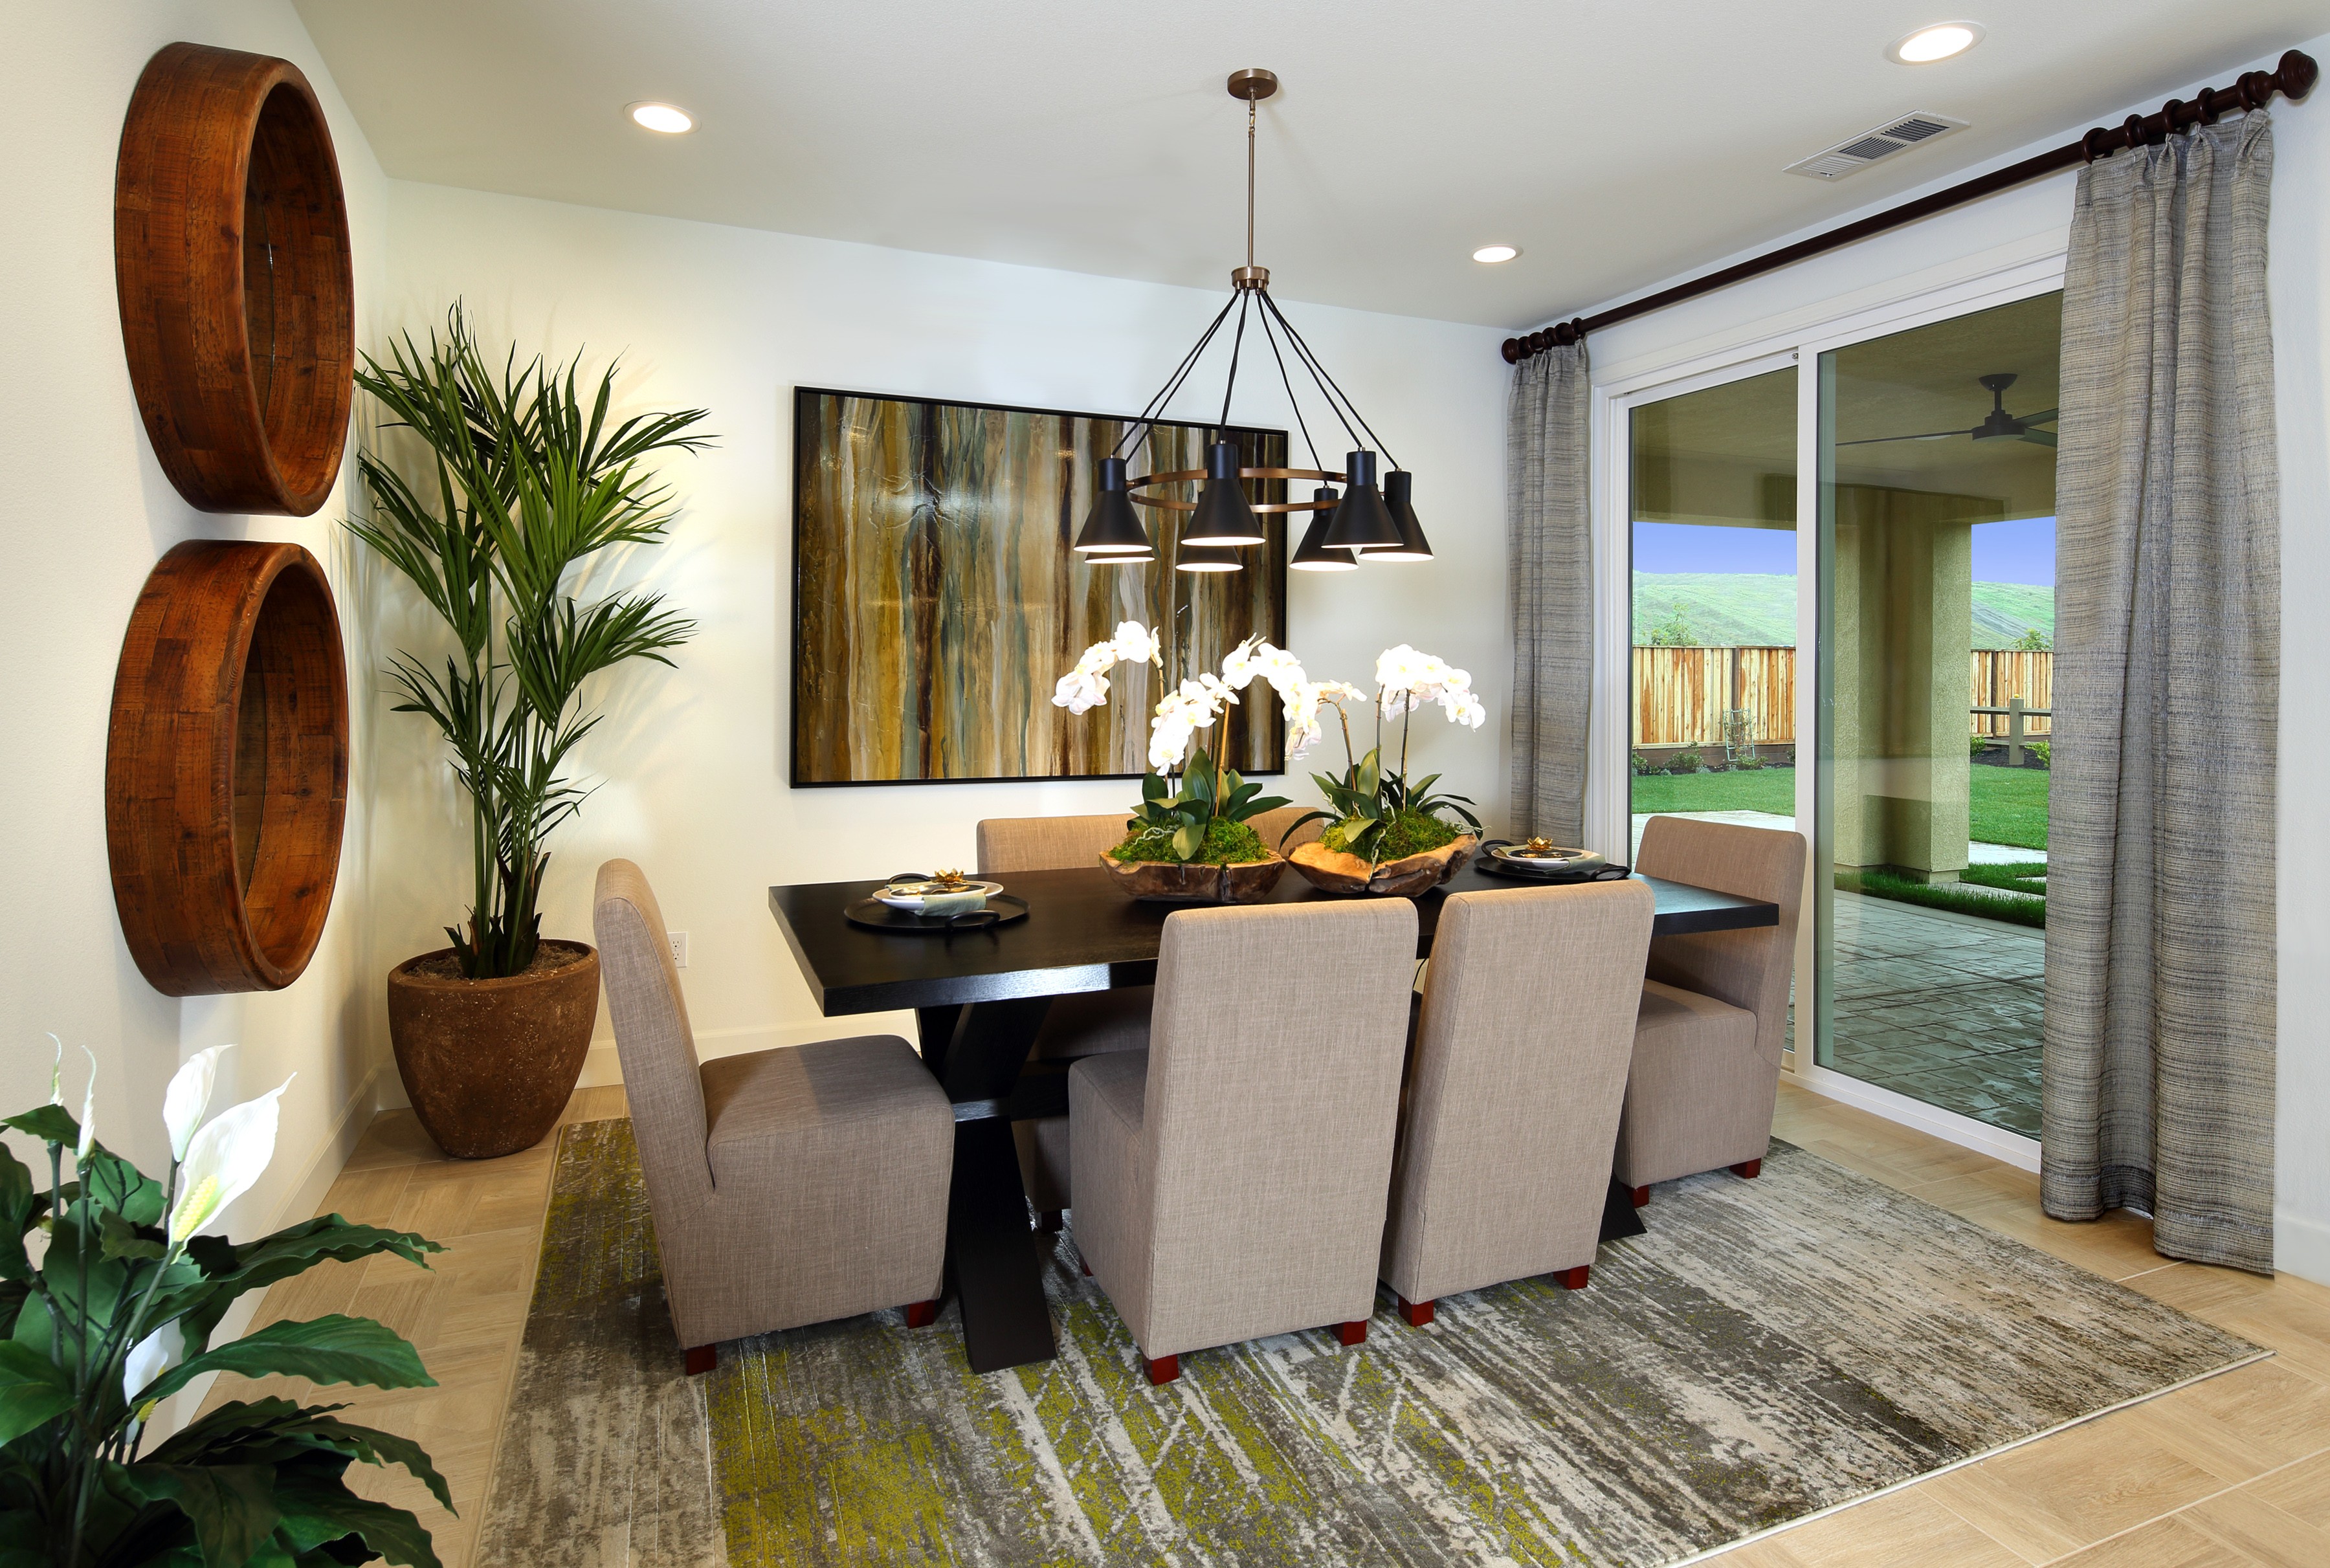 Dining room interior | Elite Builder Services